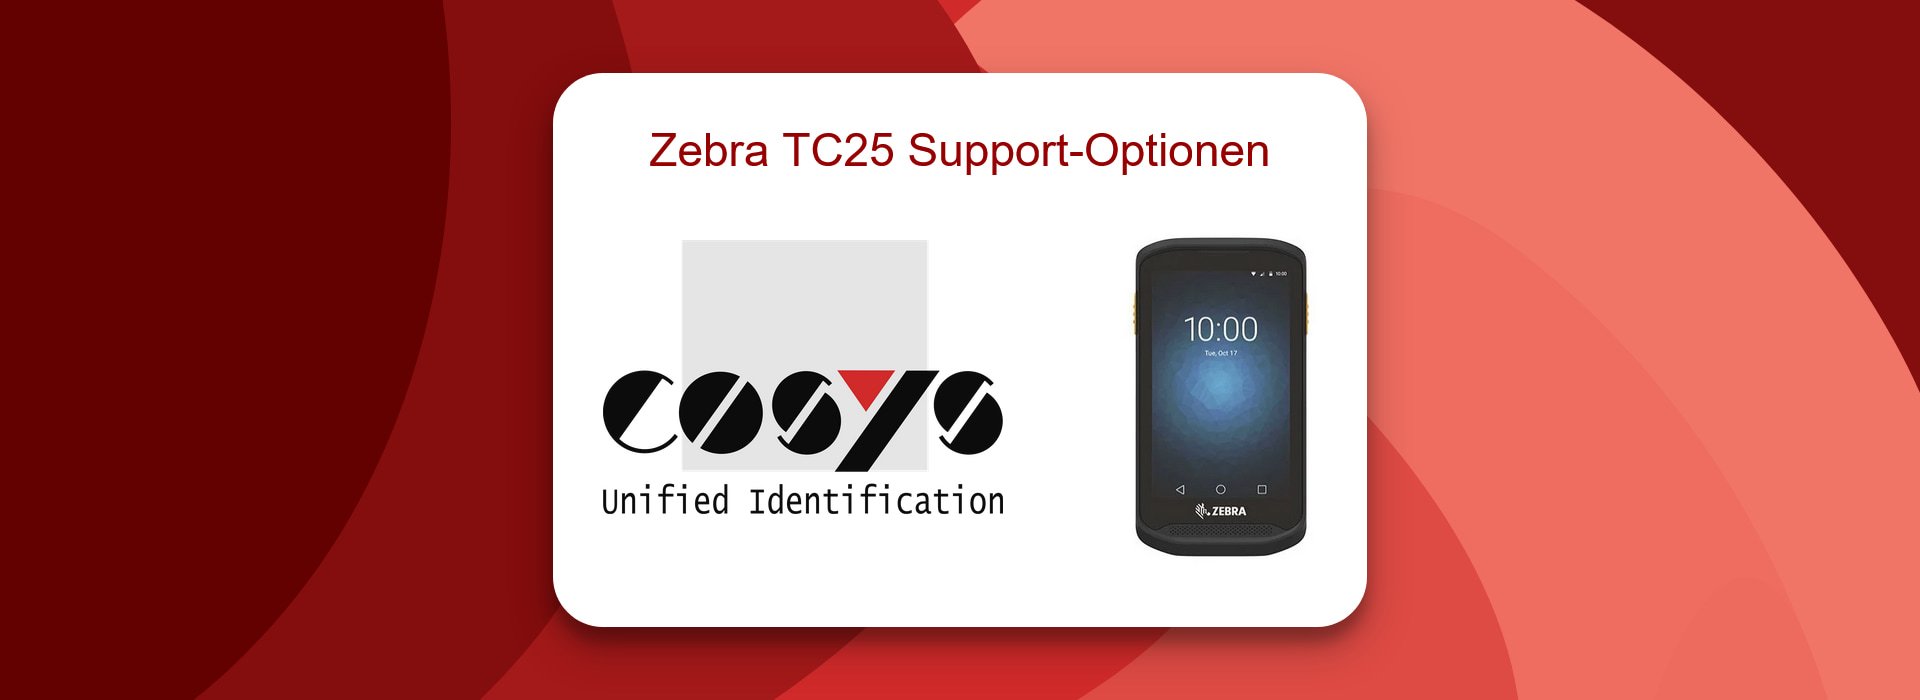 Updates: Zebra TC25 Support-Optionen